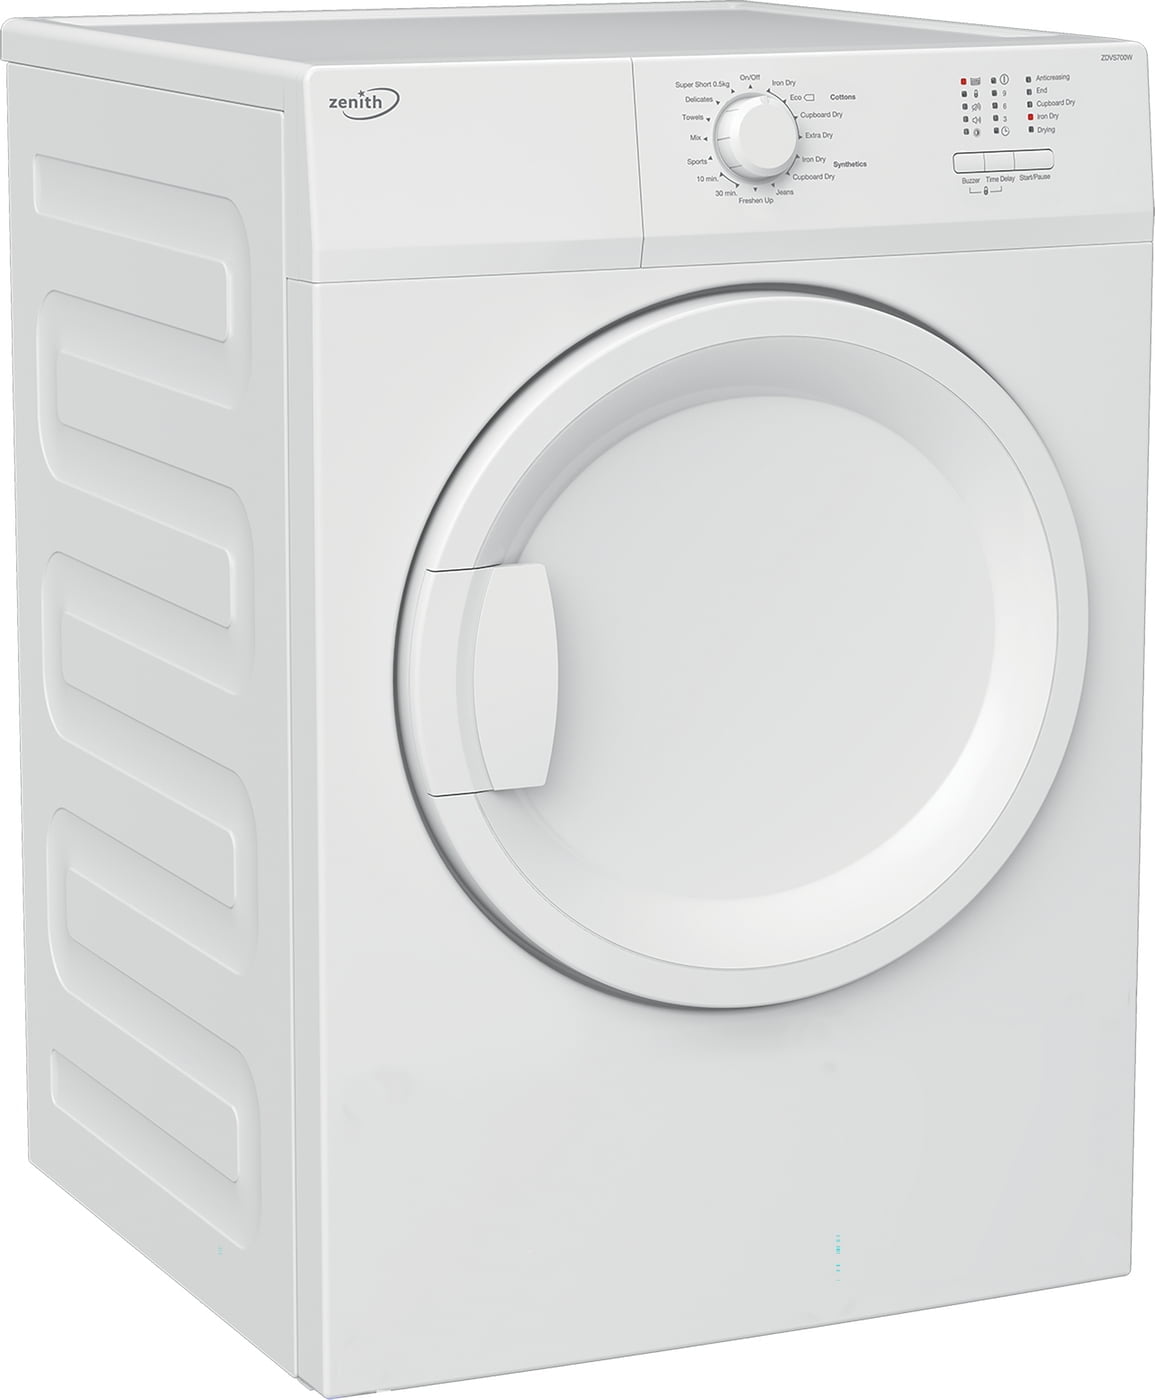 Zenith ZDVS700W 7kg Vented Tumble Dryer - White